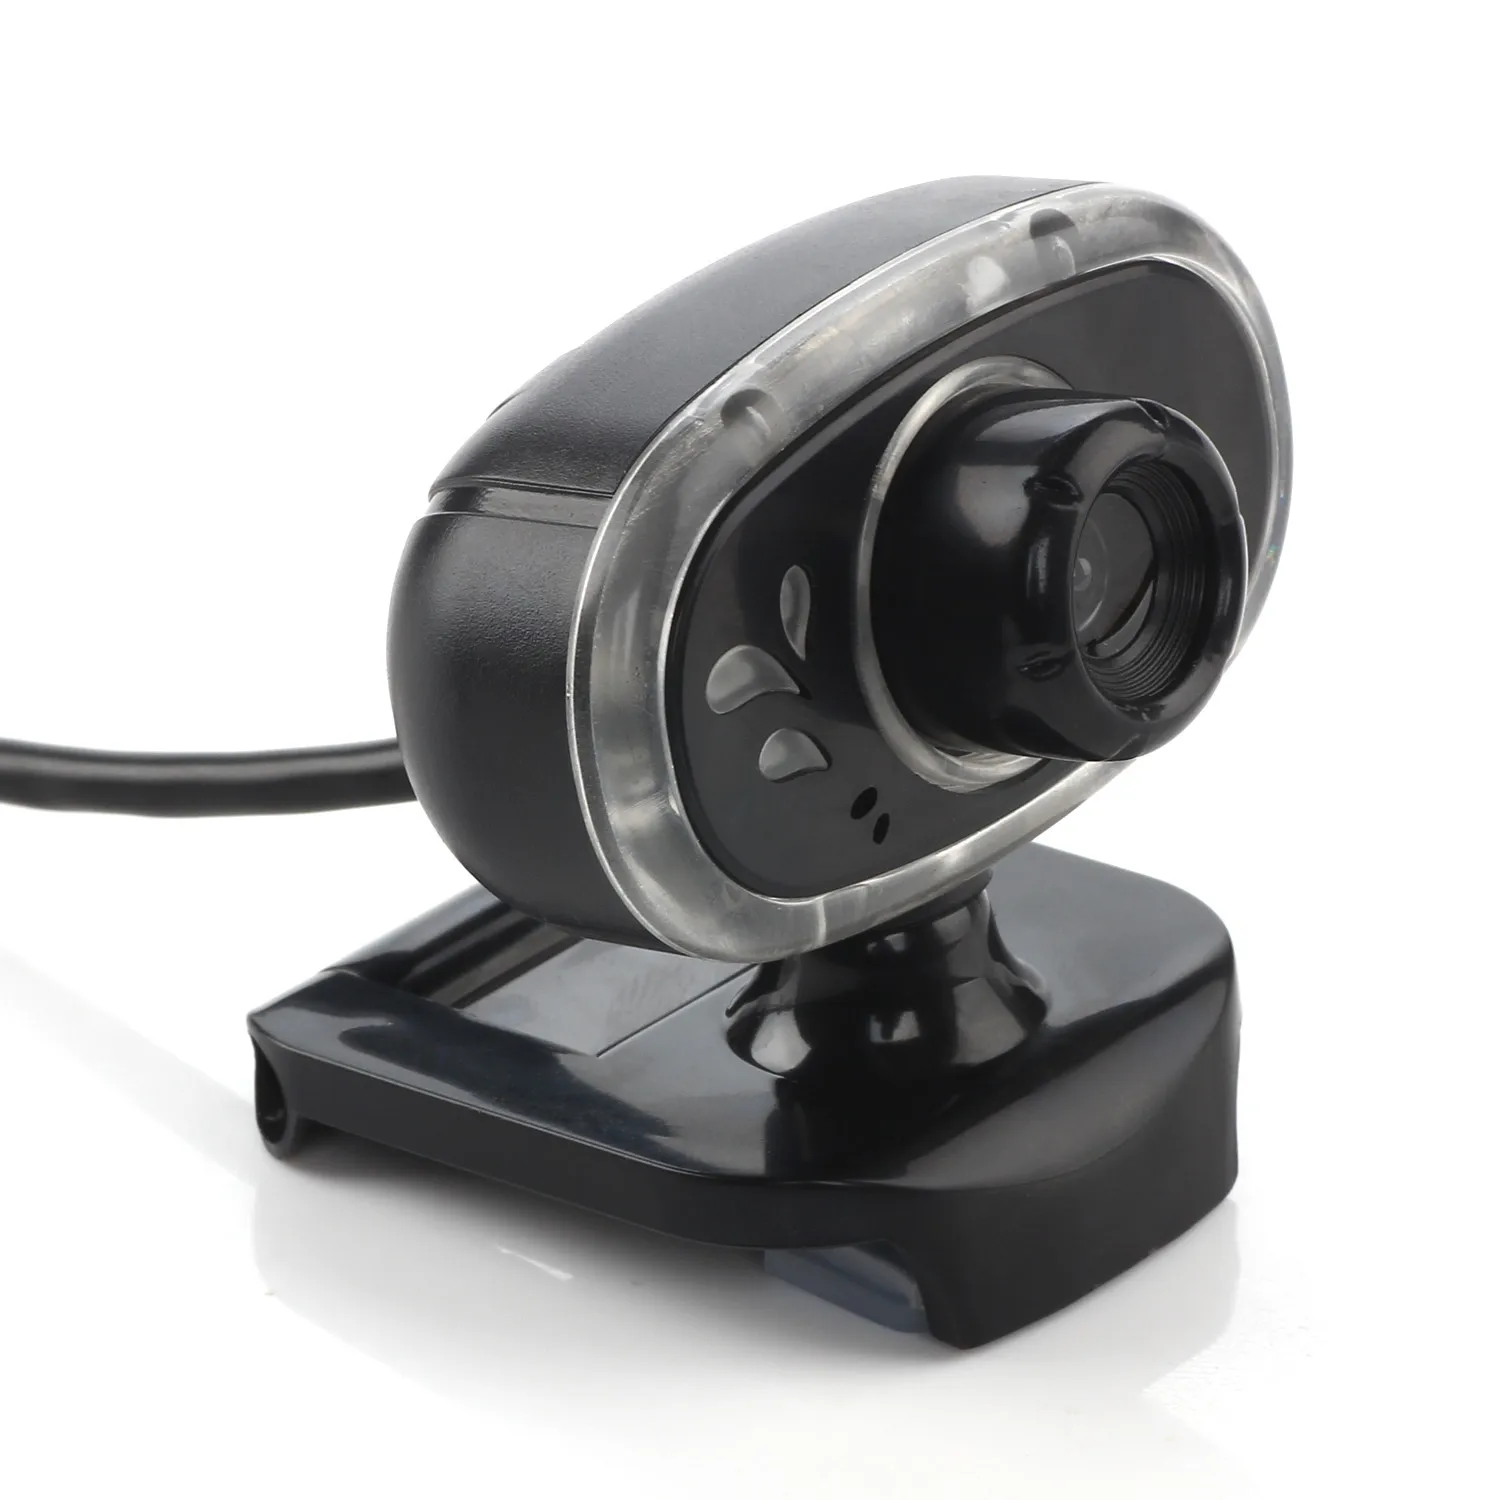 

360 Degree Rotation USB Webcam Blue Light 12 Million Pixels HD Web Camera With Mic Webcam Camera For Android TV PC Laptop #LR2